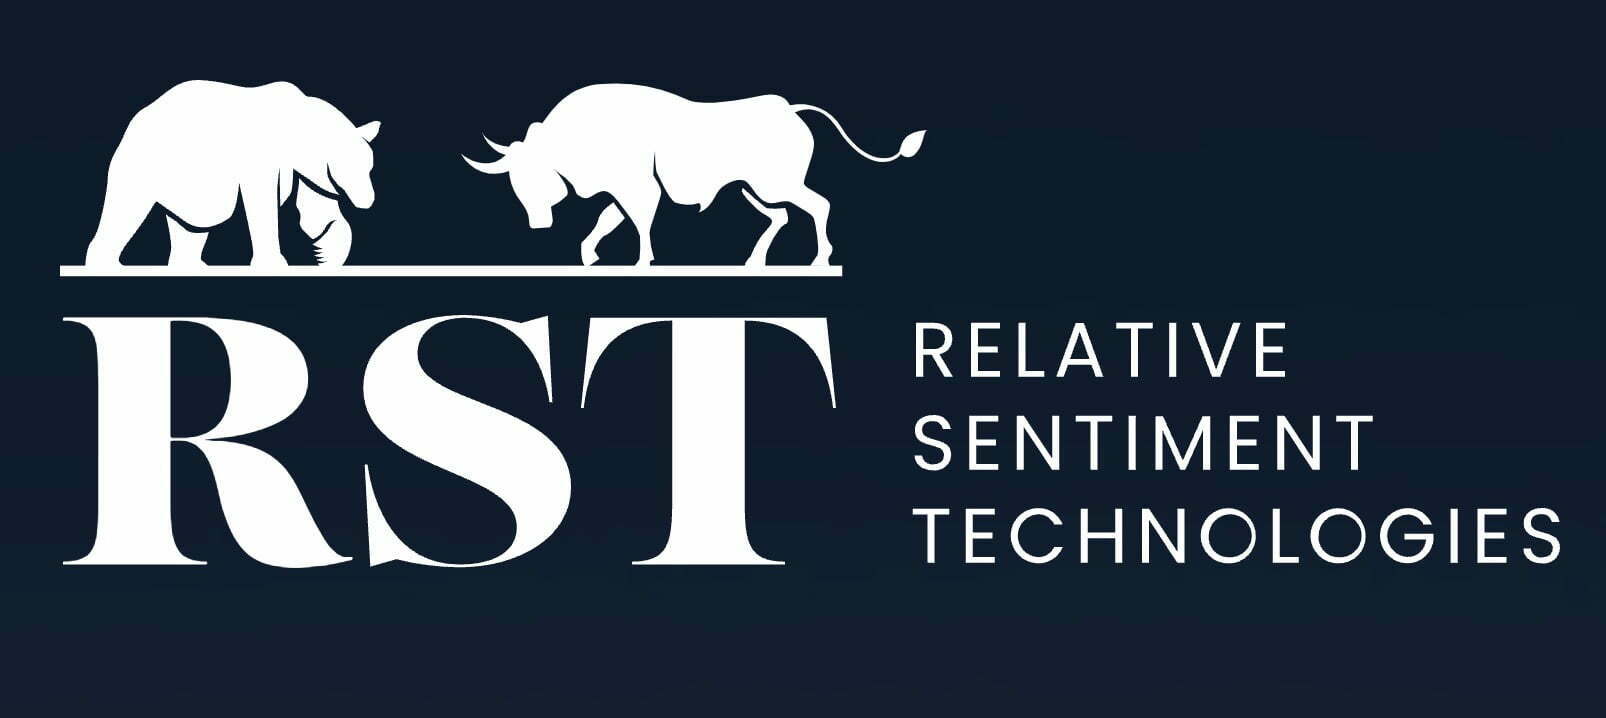 Relative Sentiment Technologies Logo